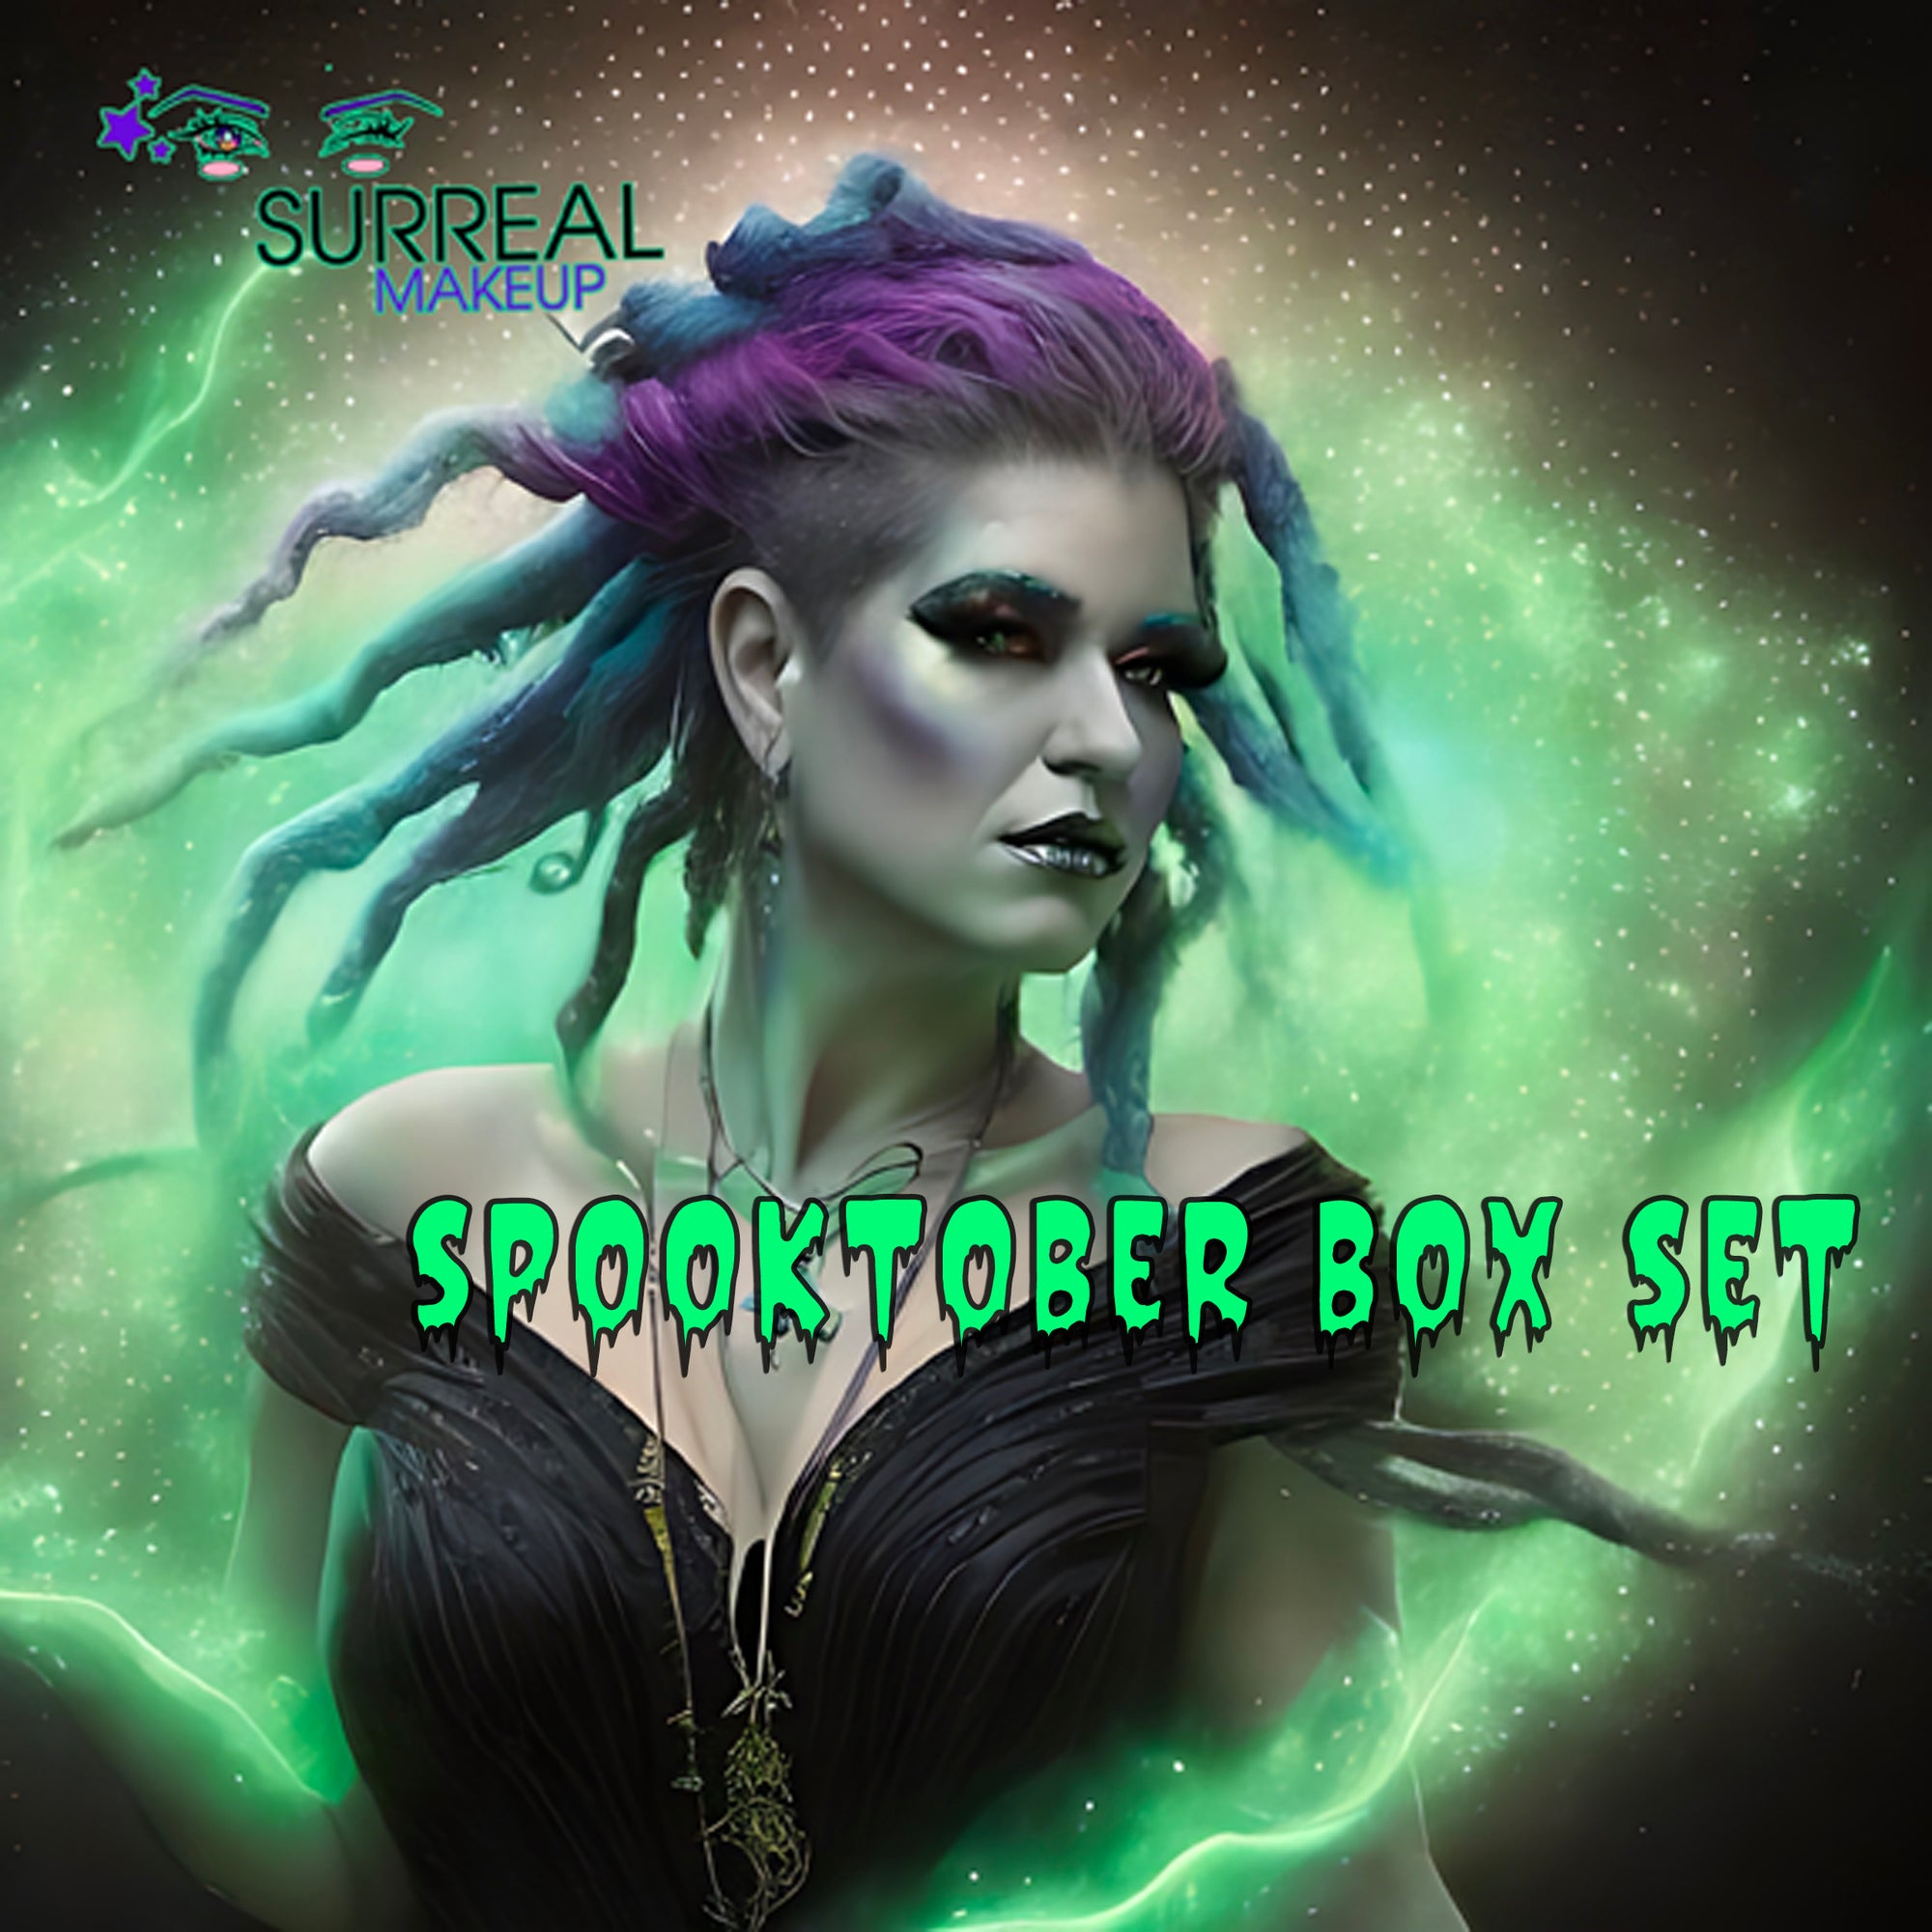 Spooktober Box Set Artwork by Surreal Makeup